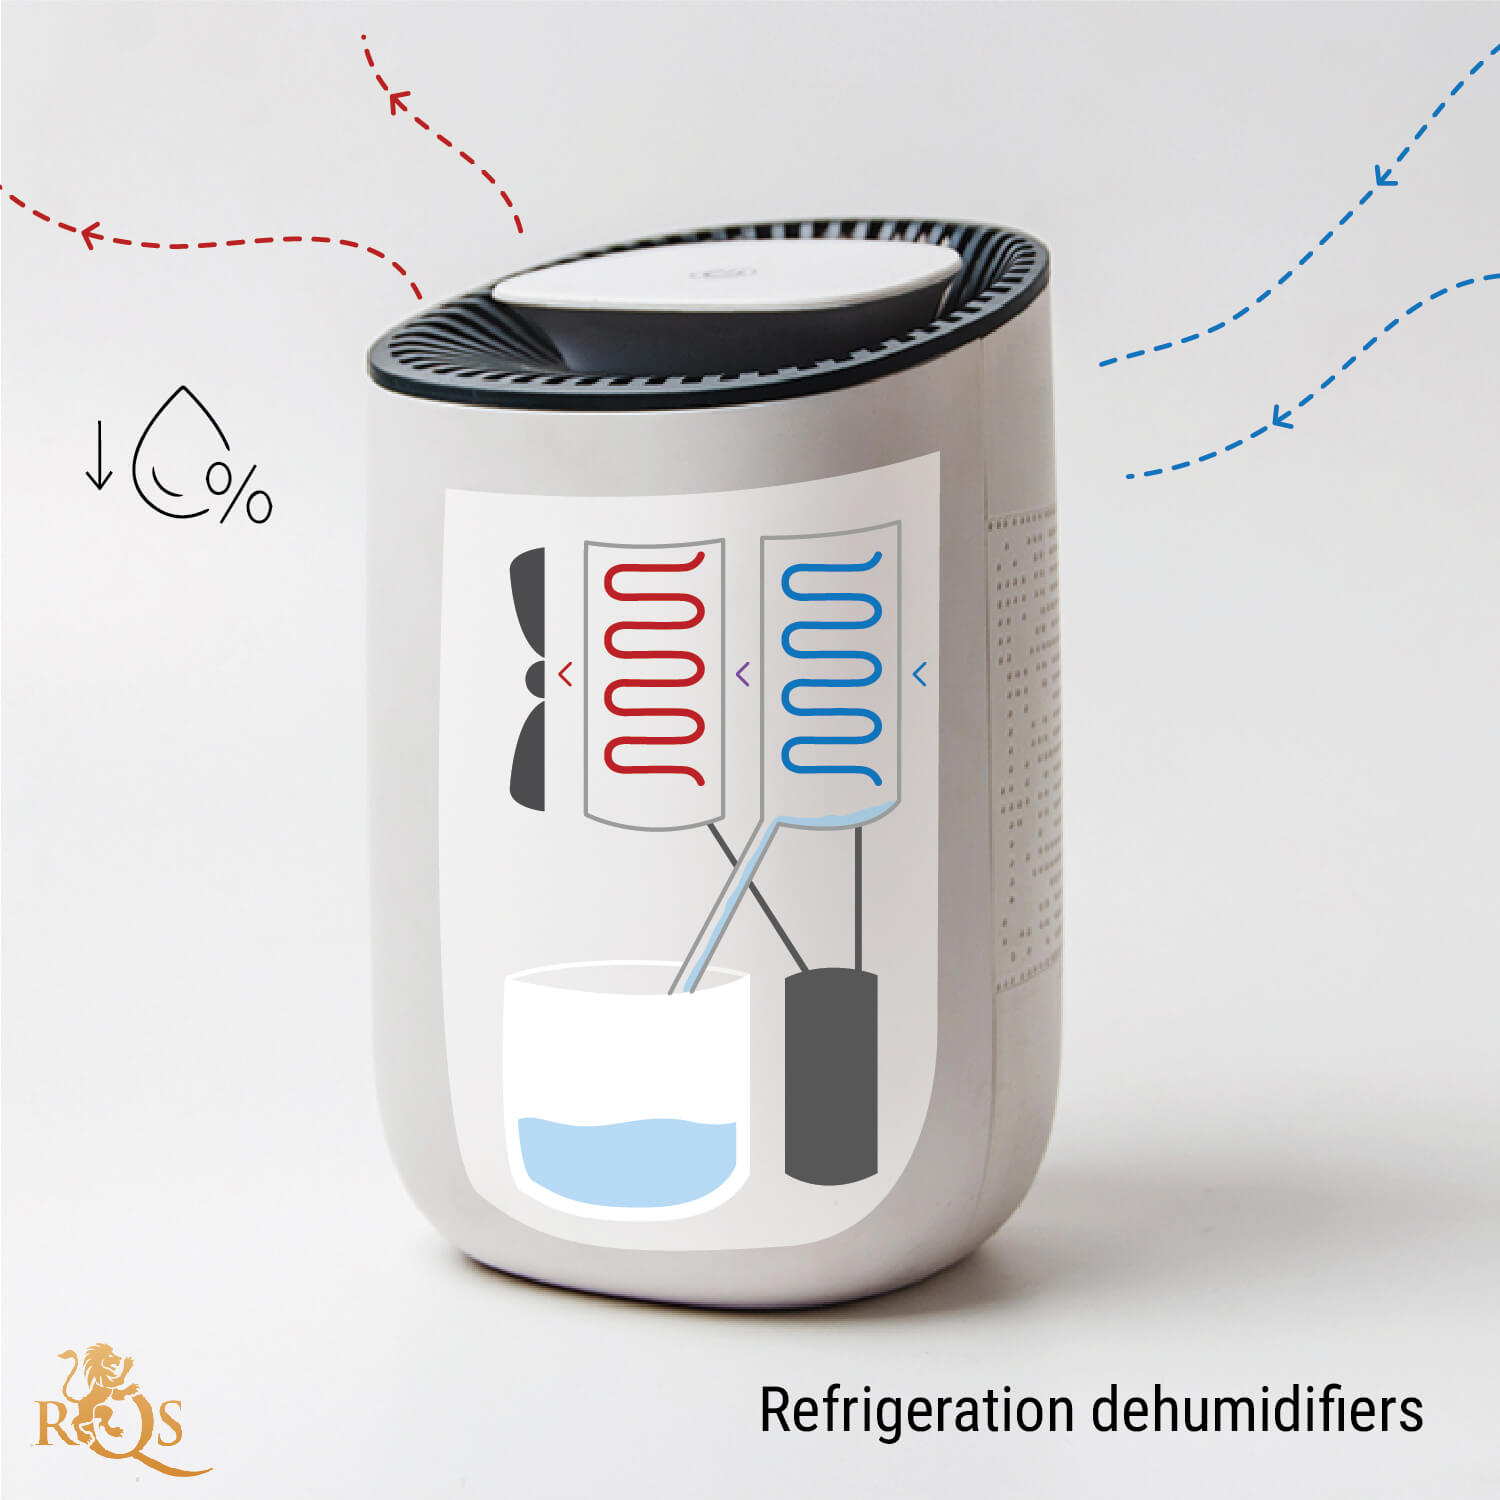 How Does a Dehumidifier Work?